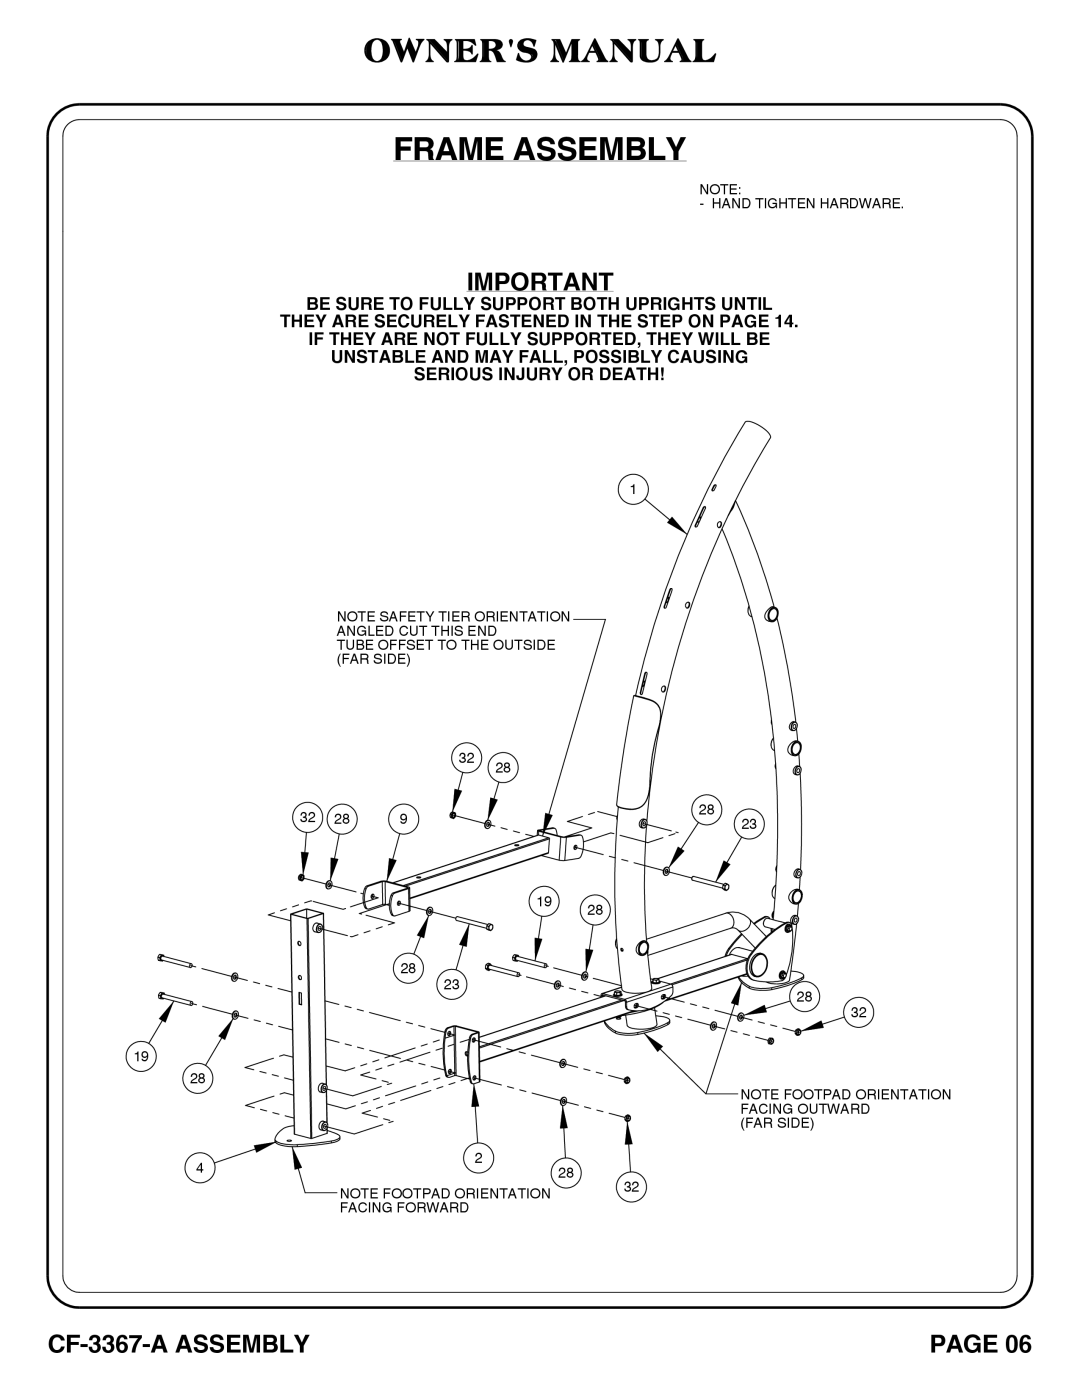 Hoist Fitness CF-3367-A SQUAT RACK owner manual Frame Assembly 